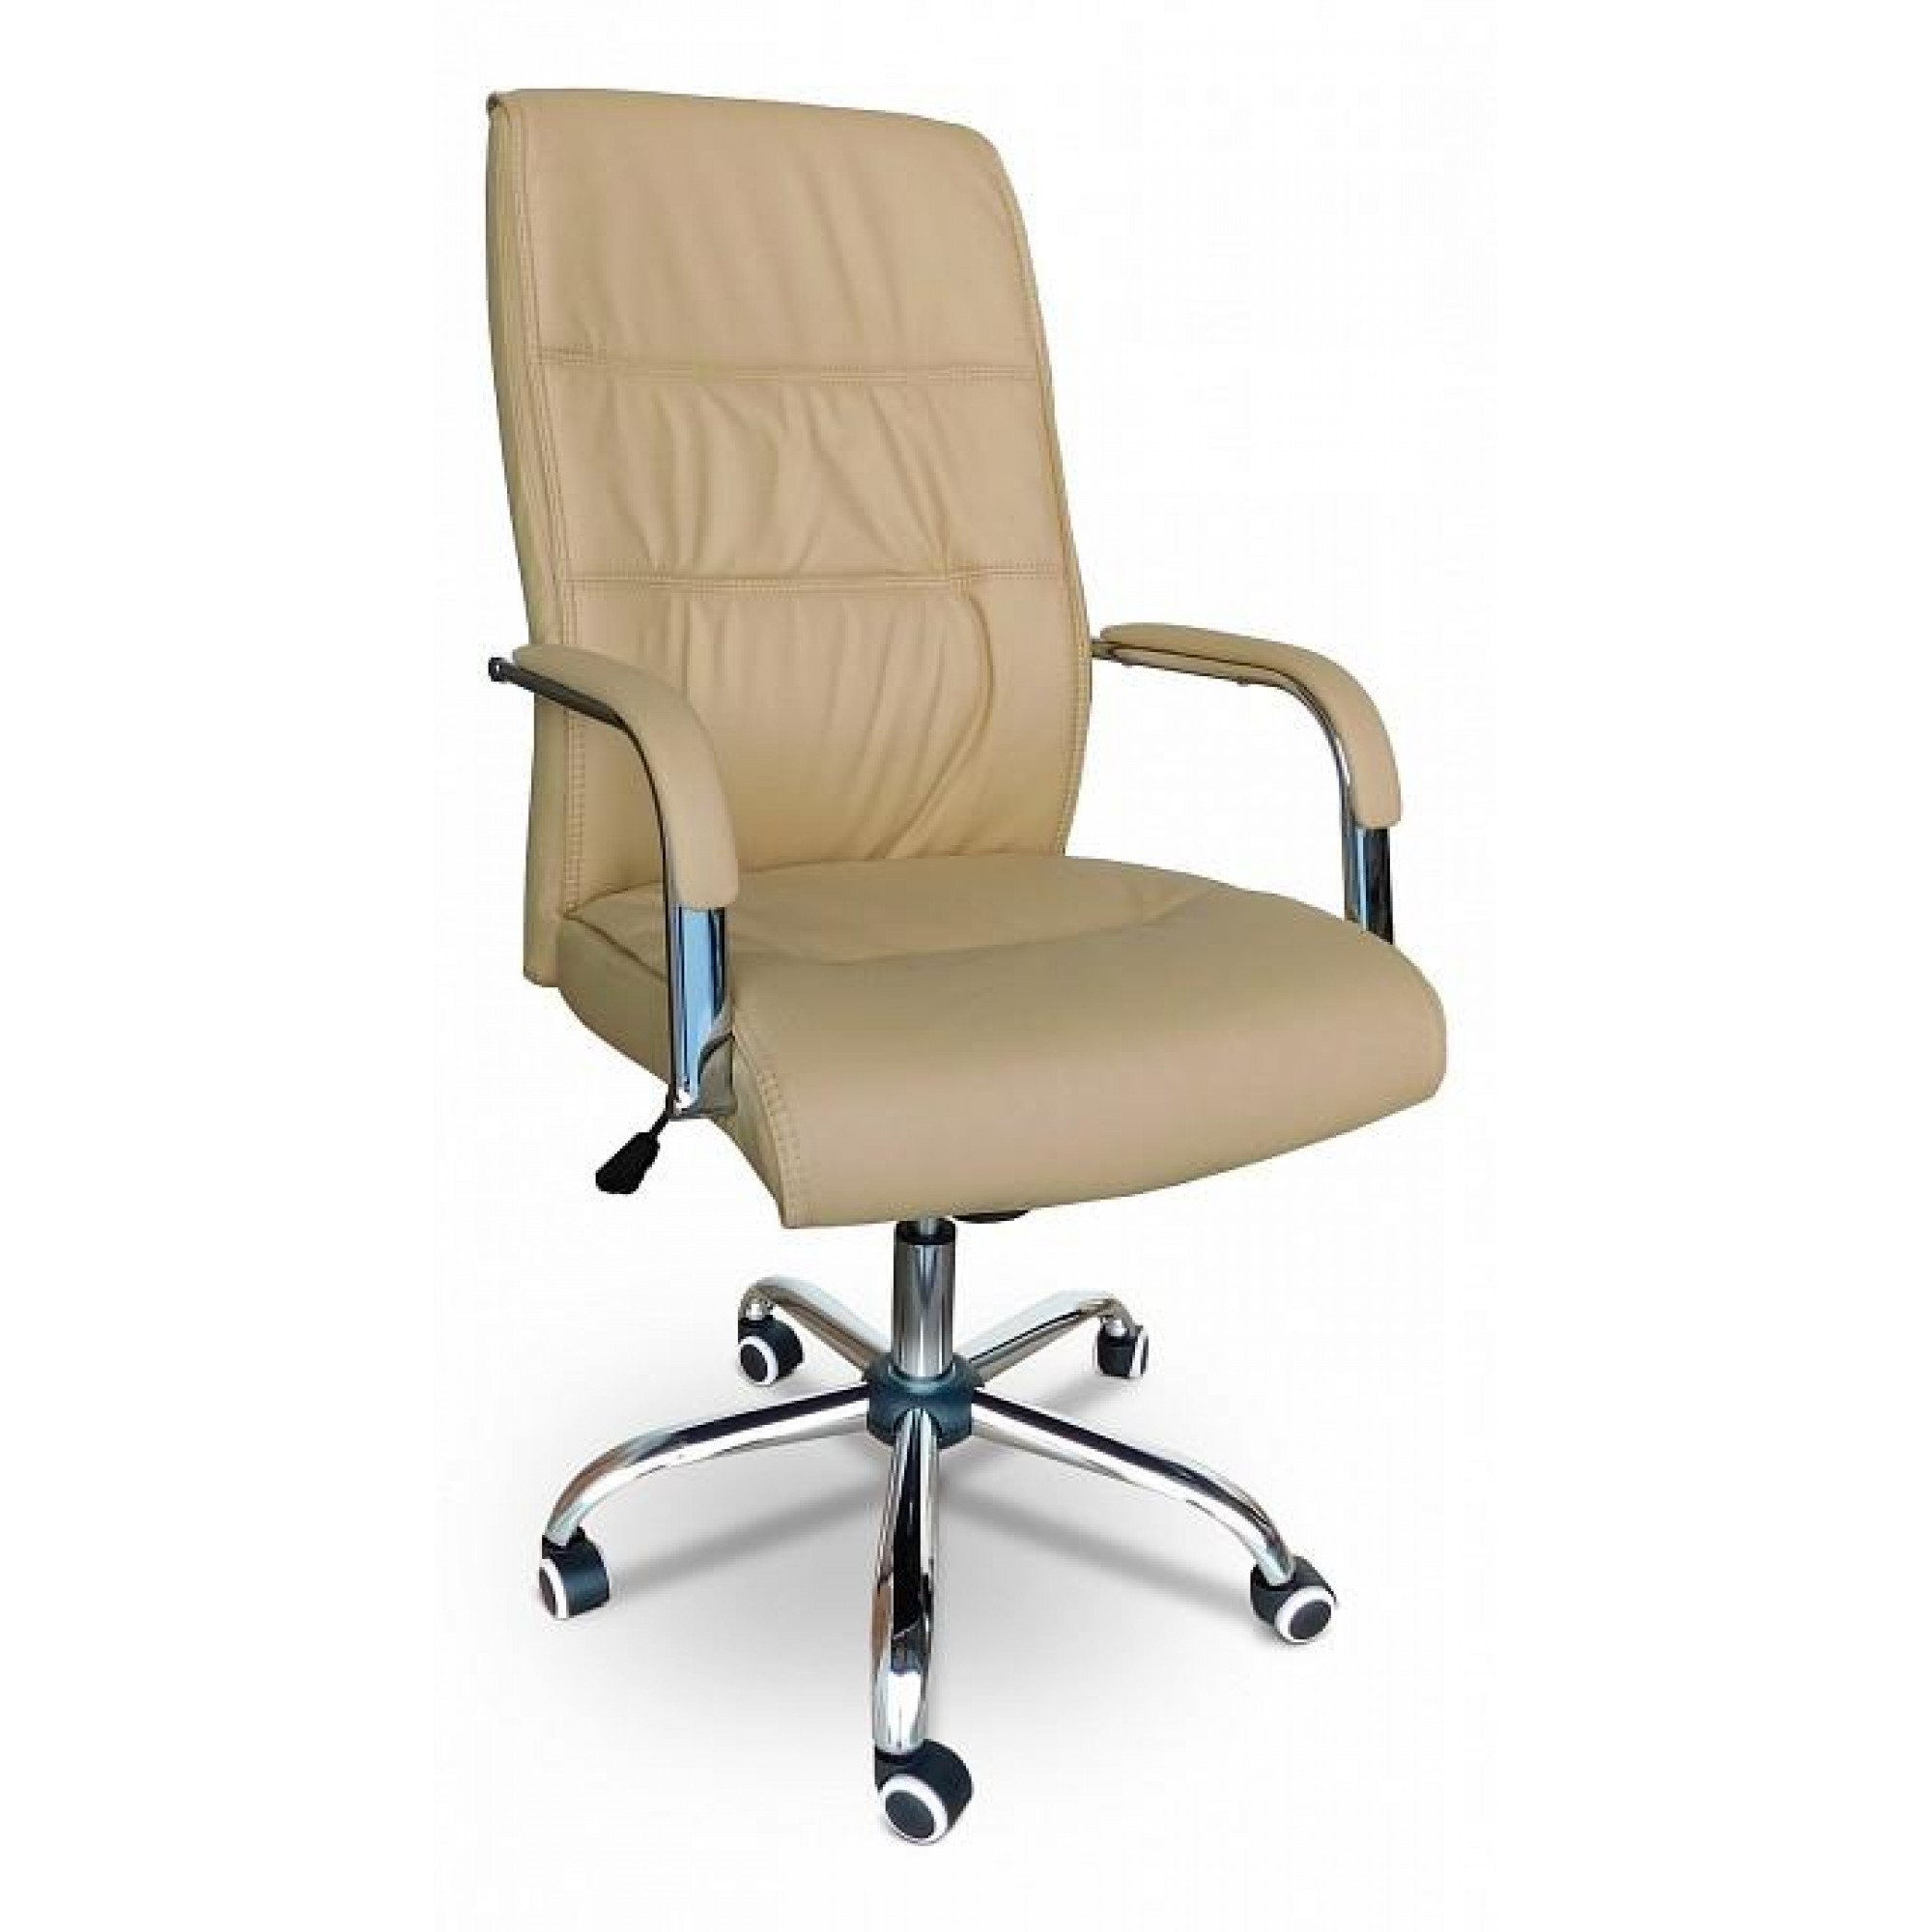 Кресло компьютерное MF-333A 405435, MF-333A beige